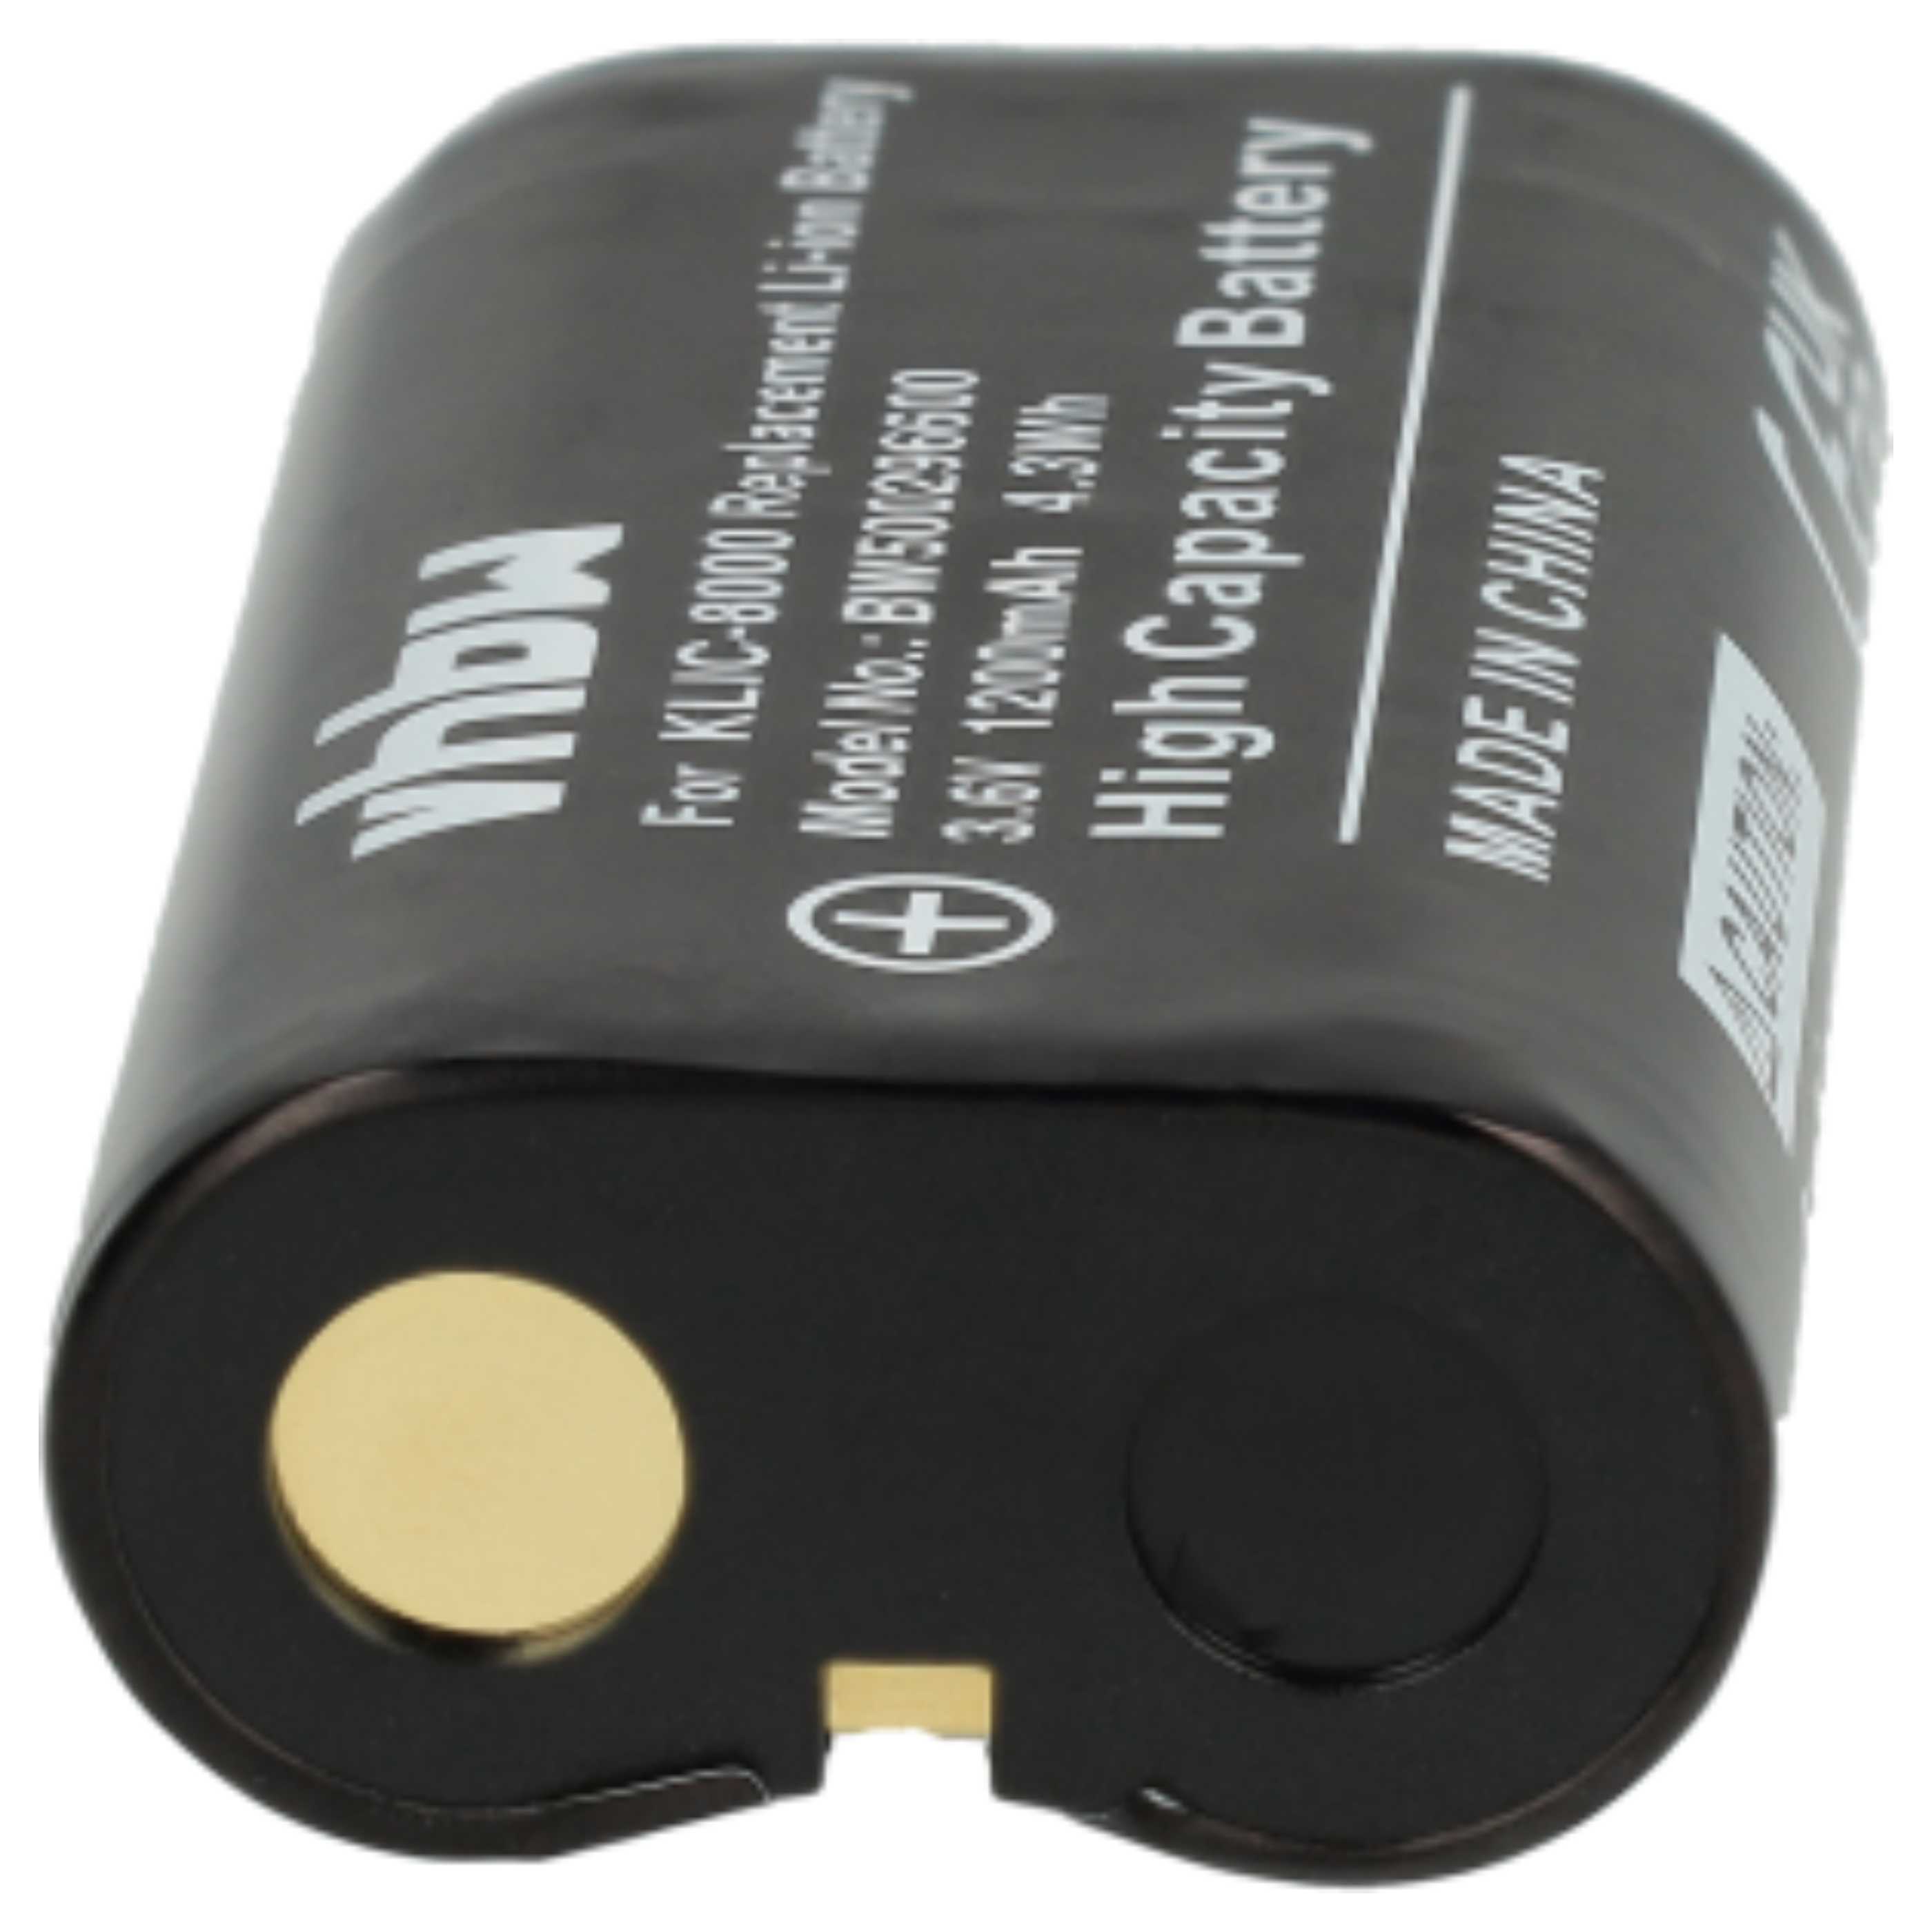 Akumulator do aparatu cyfrowego zamiennik Ricoh DB-50 - 1520 mAh 3,6 V Li-Ion